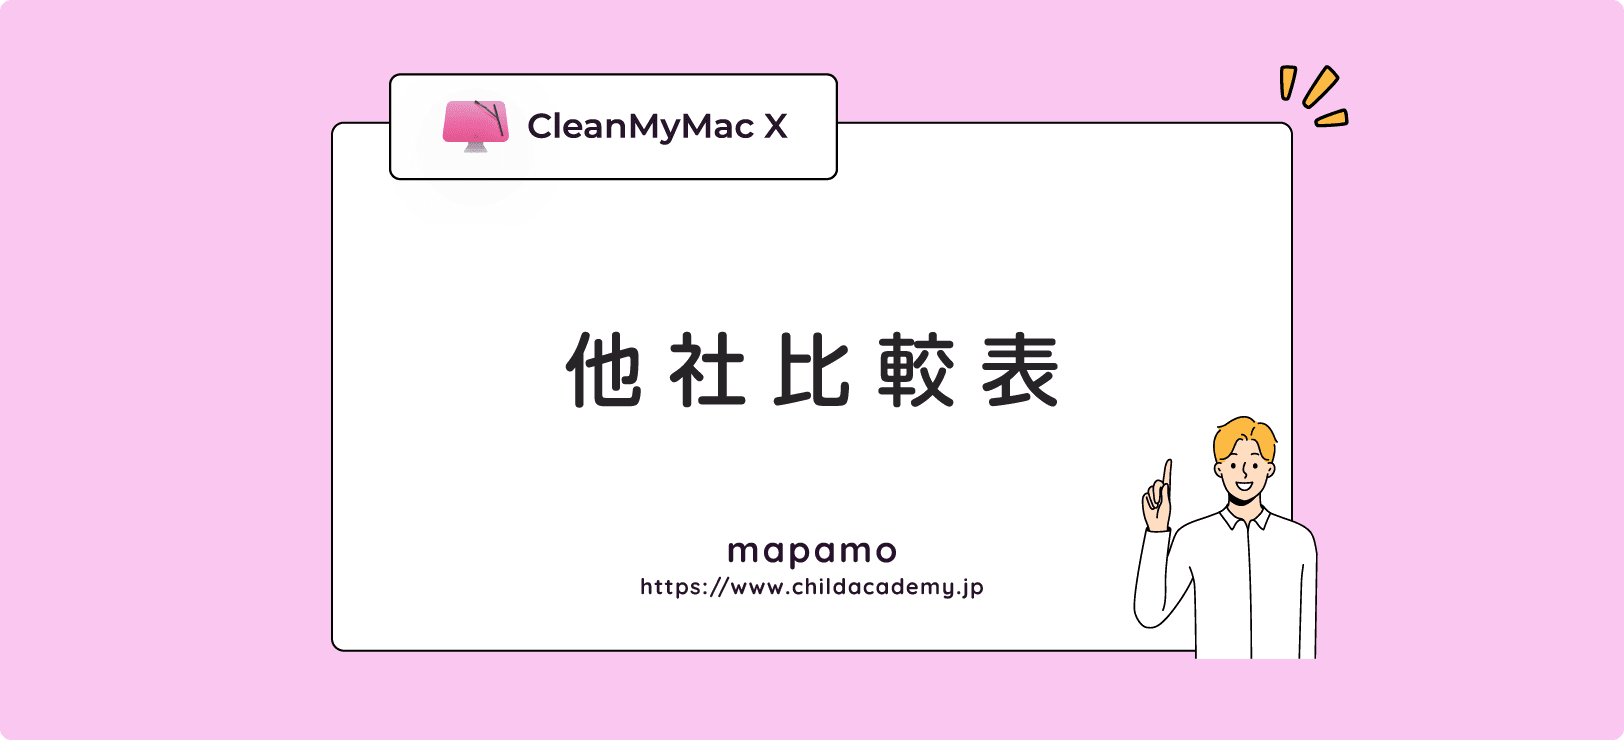 CleanMyMac X の他社比較表